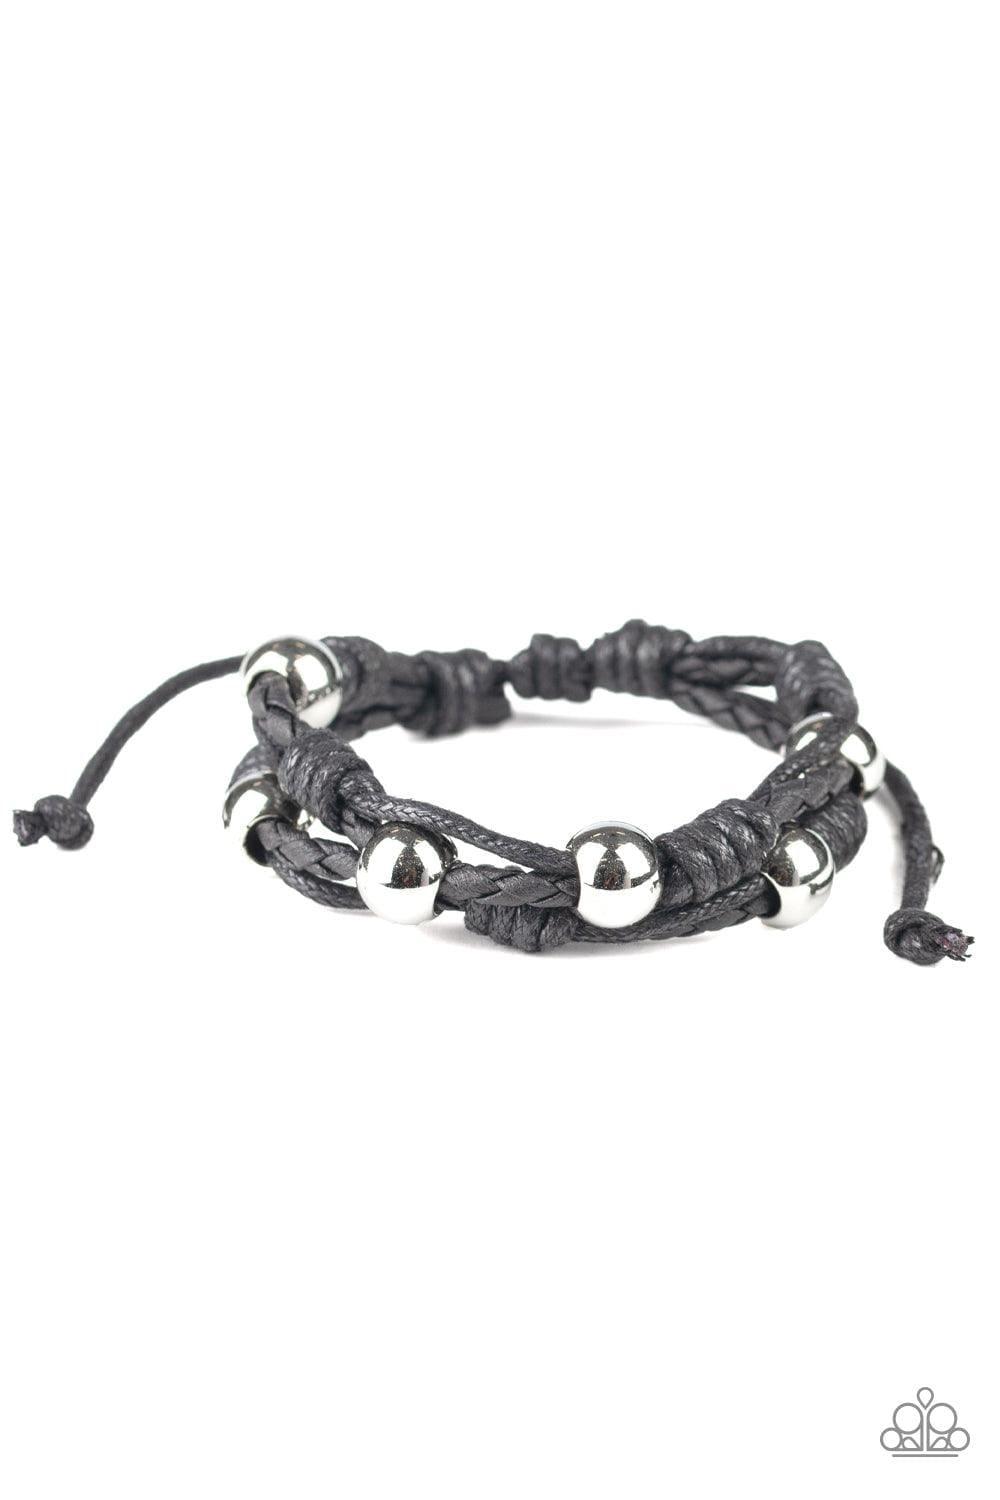 Paparazzi Accessories - Free Climb - Black Urban Bracelet - Bling by JessieK